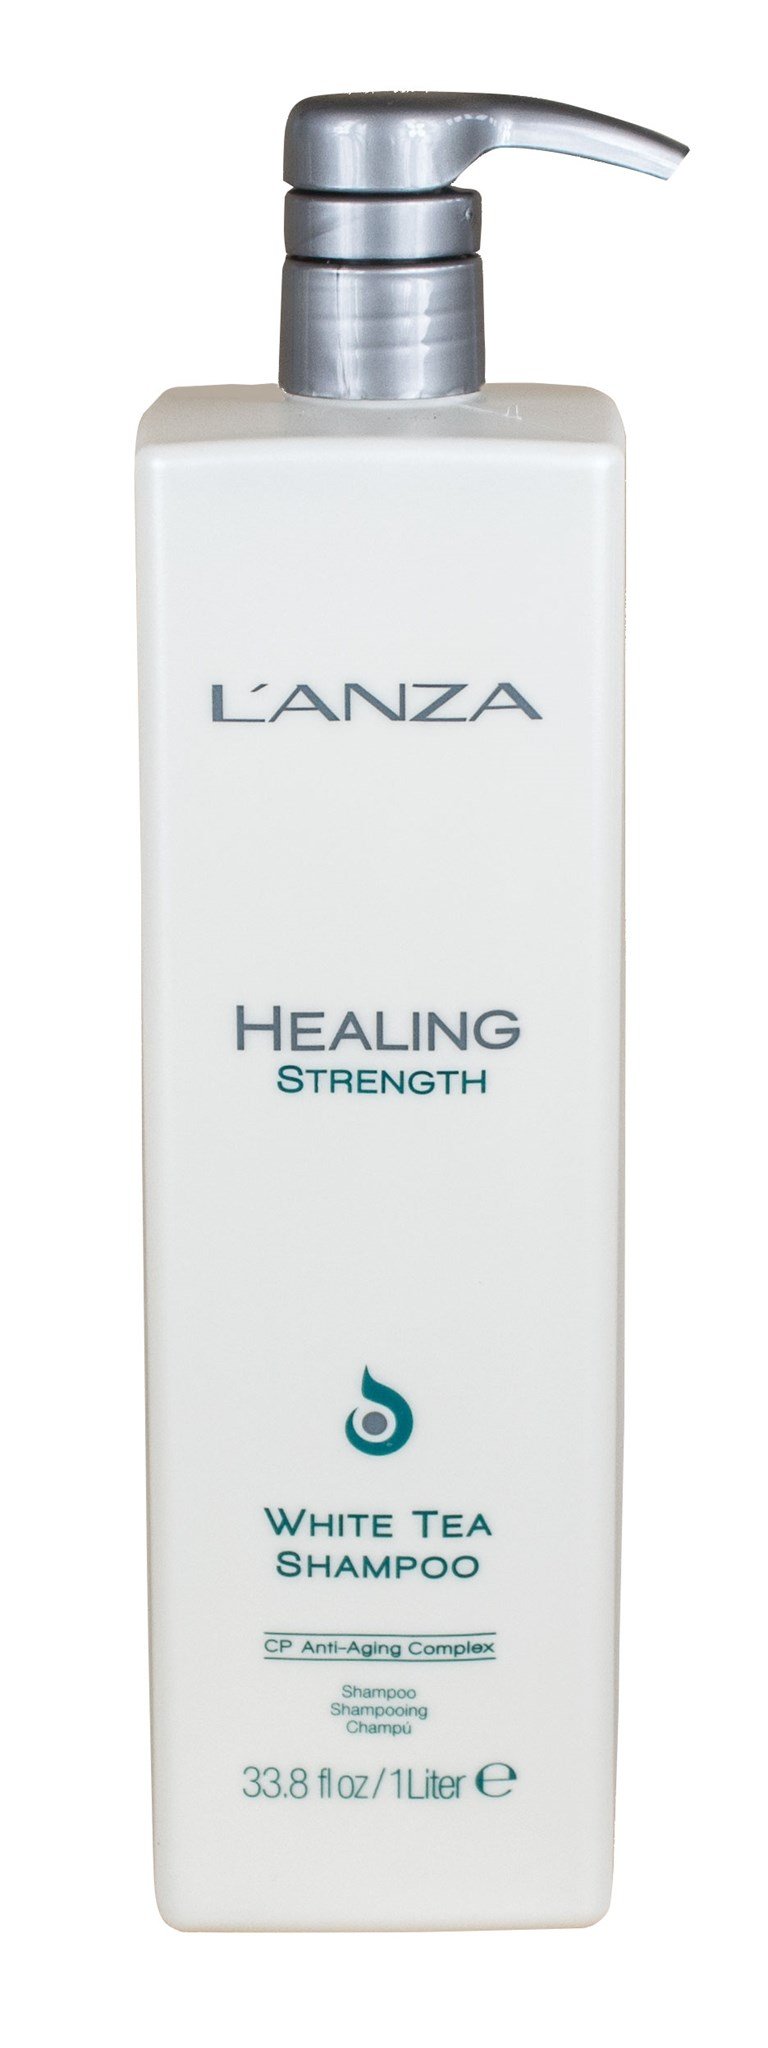 Lanza Healing Strength White Tea Shampoo Ltr